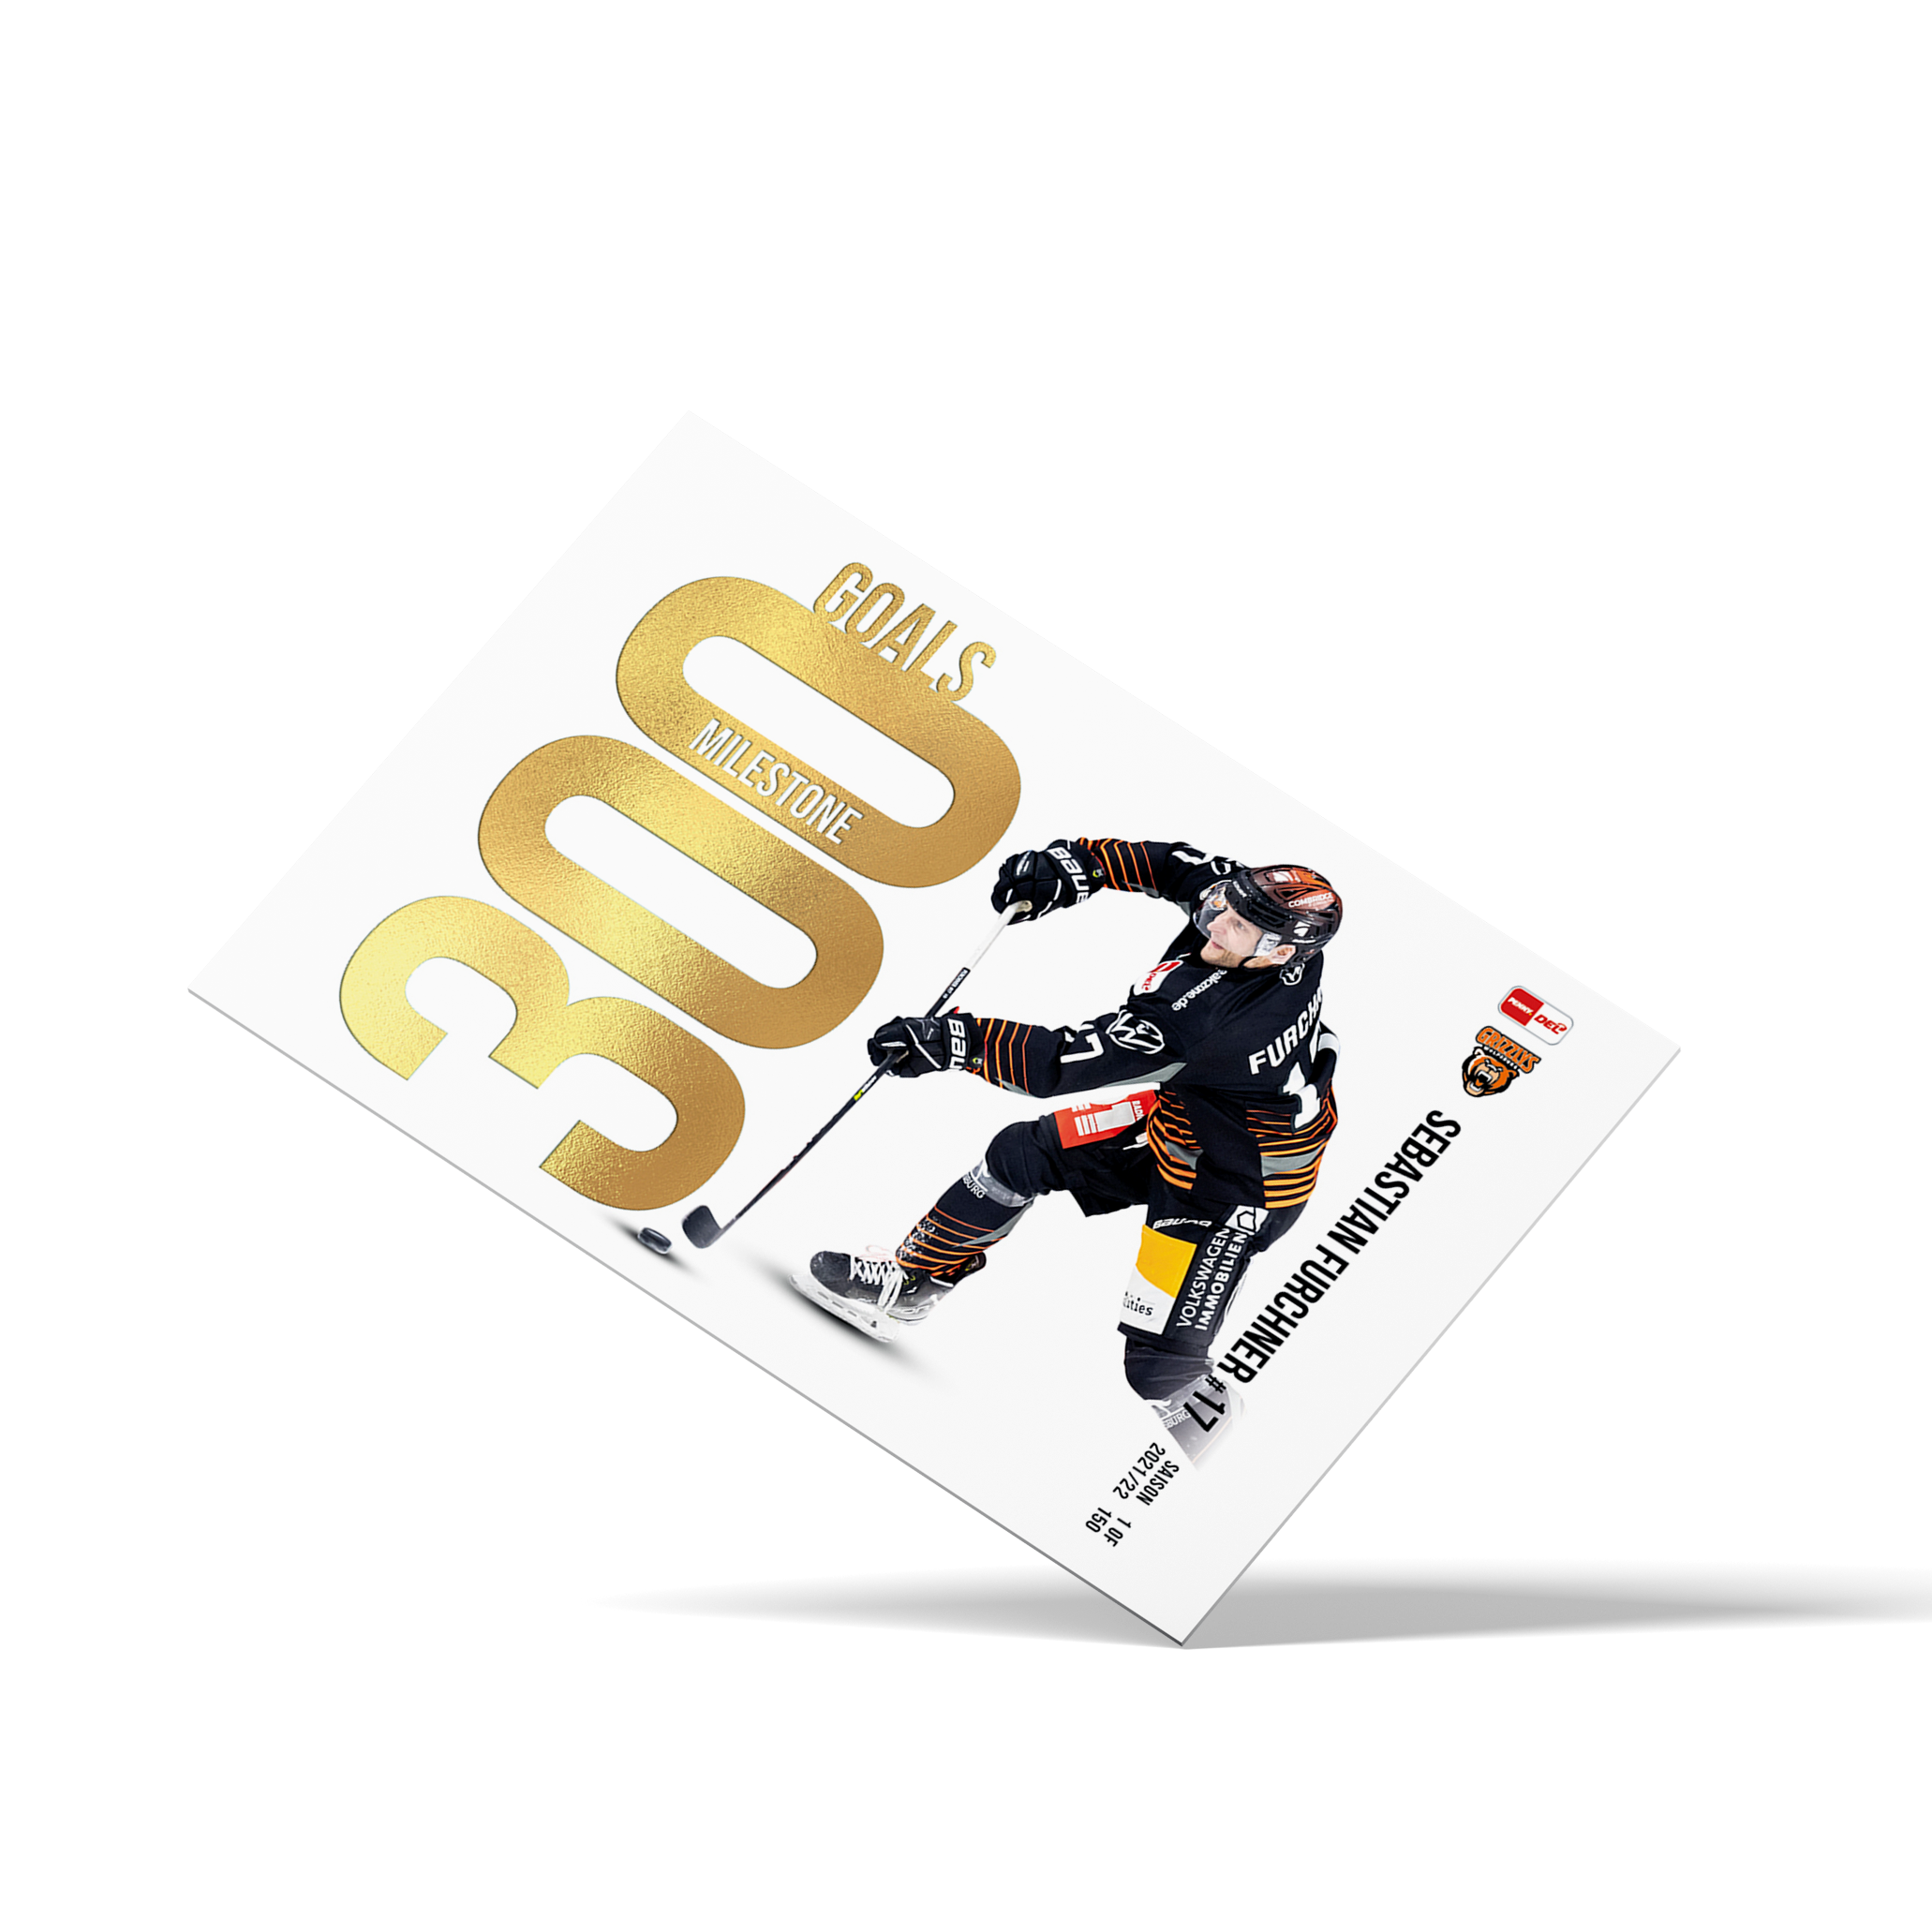 MILESTONE - 300 Goals - Sebastian Furchner